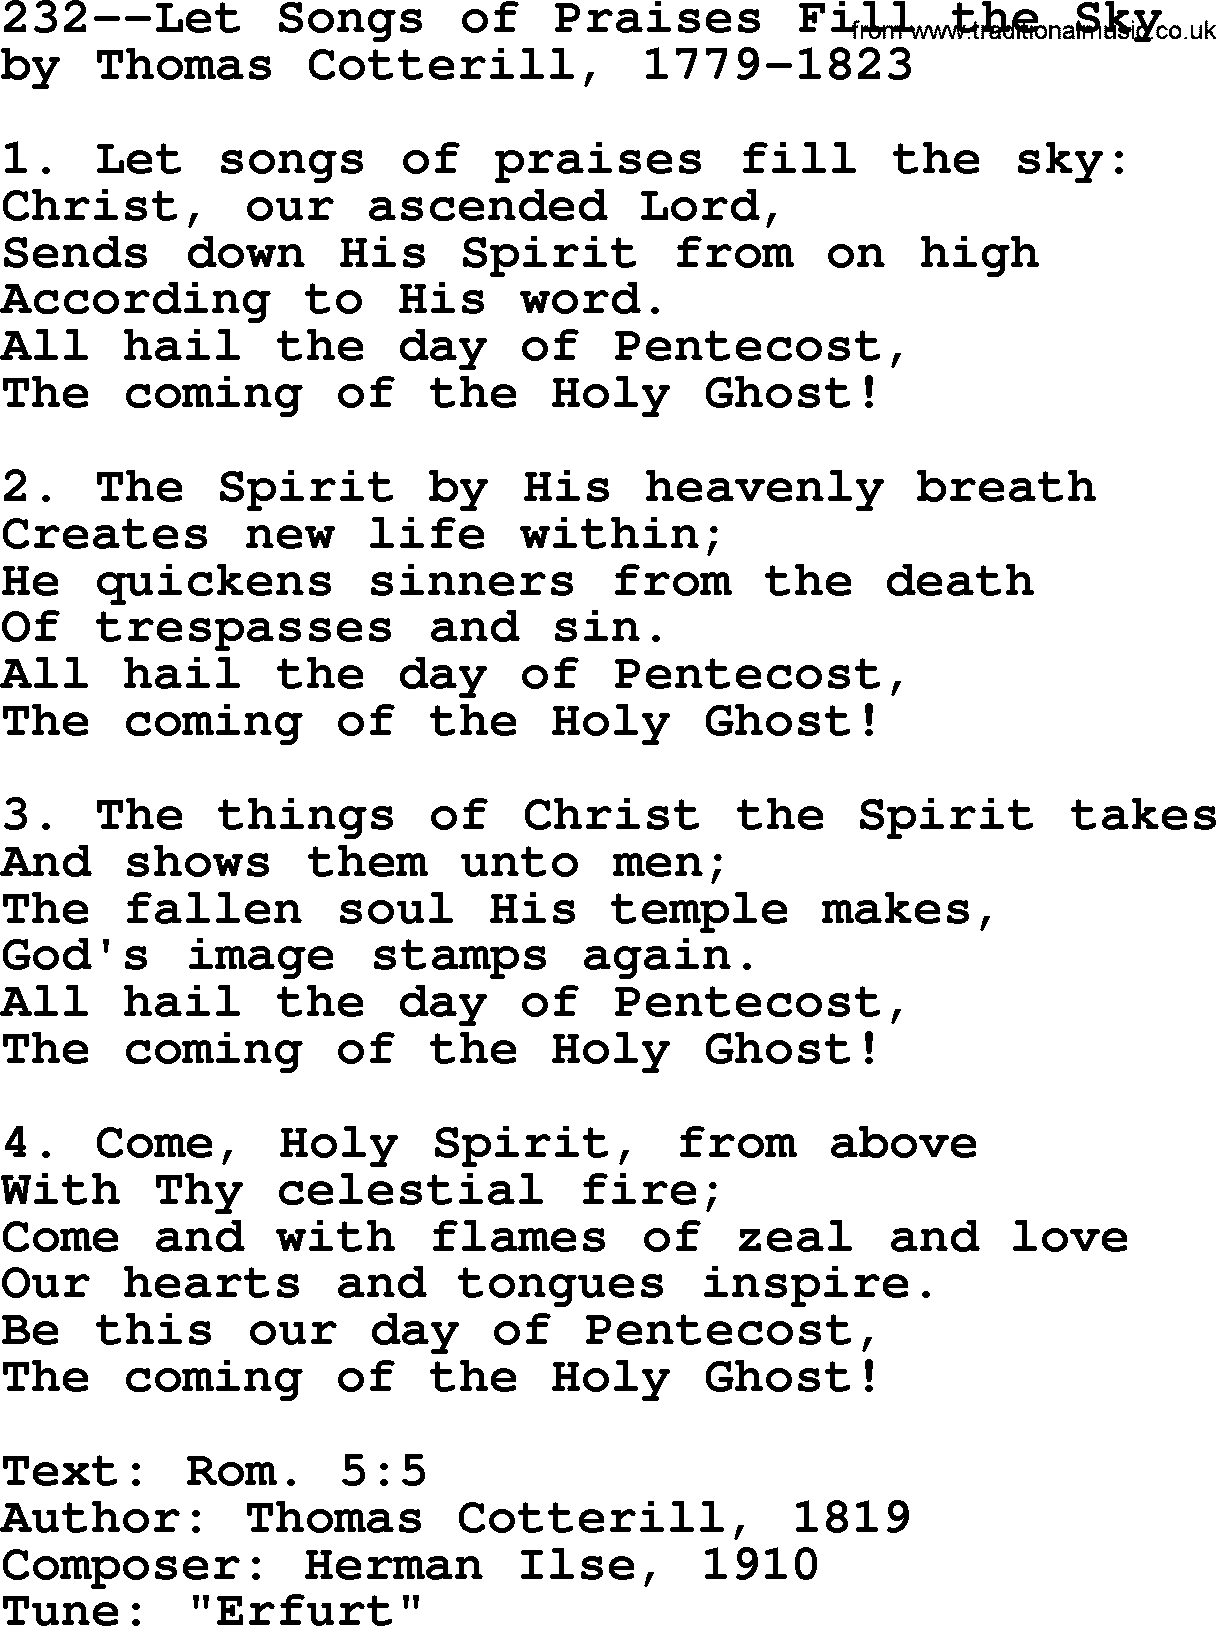 Lutheran Hymn: 232--Let Songs of Praises Fill the Sky.txt lyrics with PDF